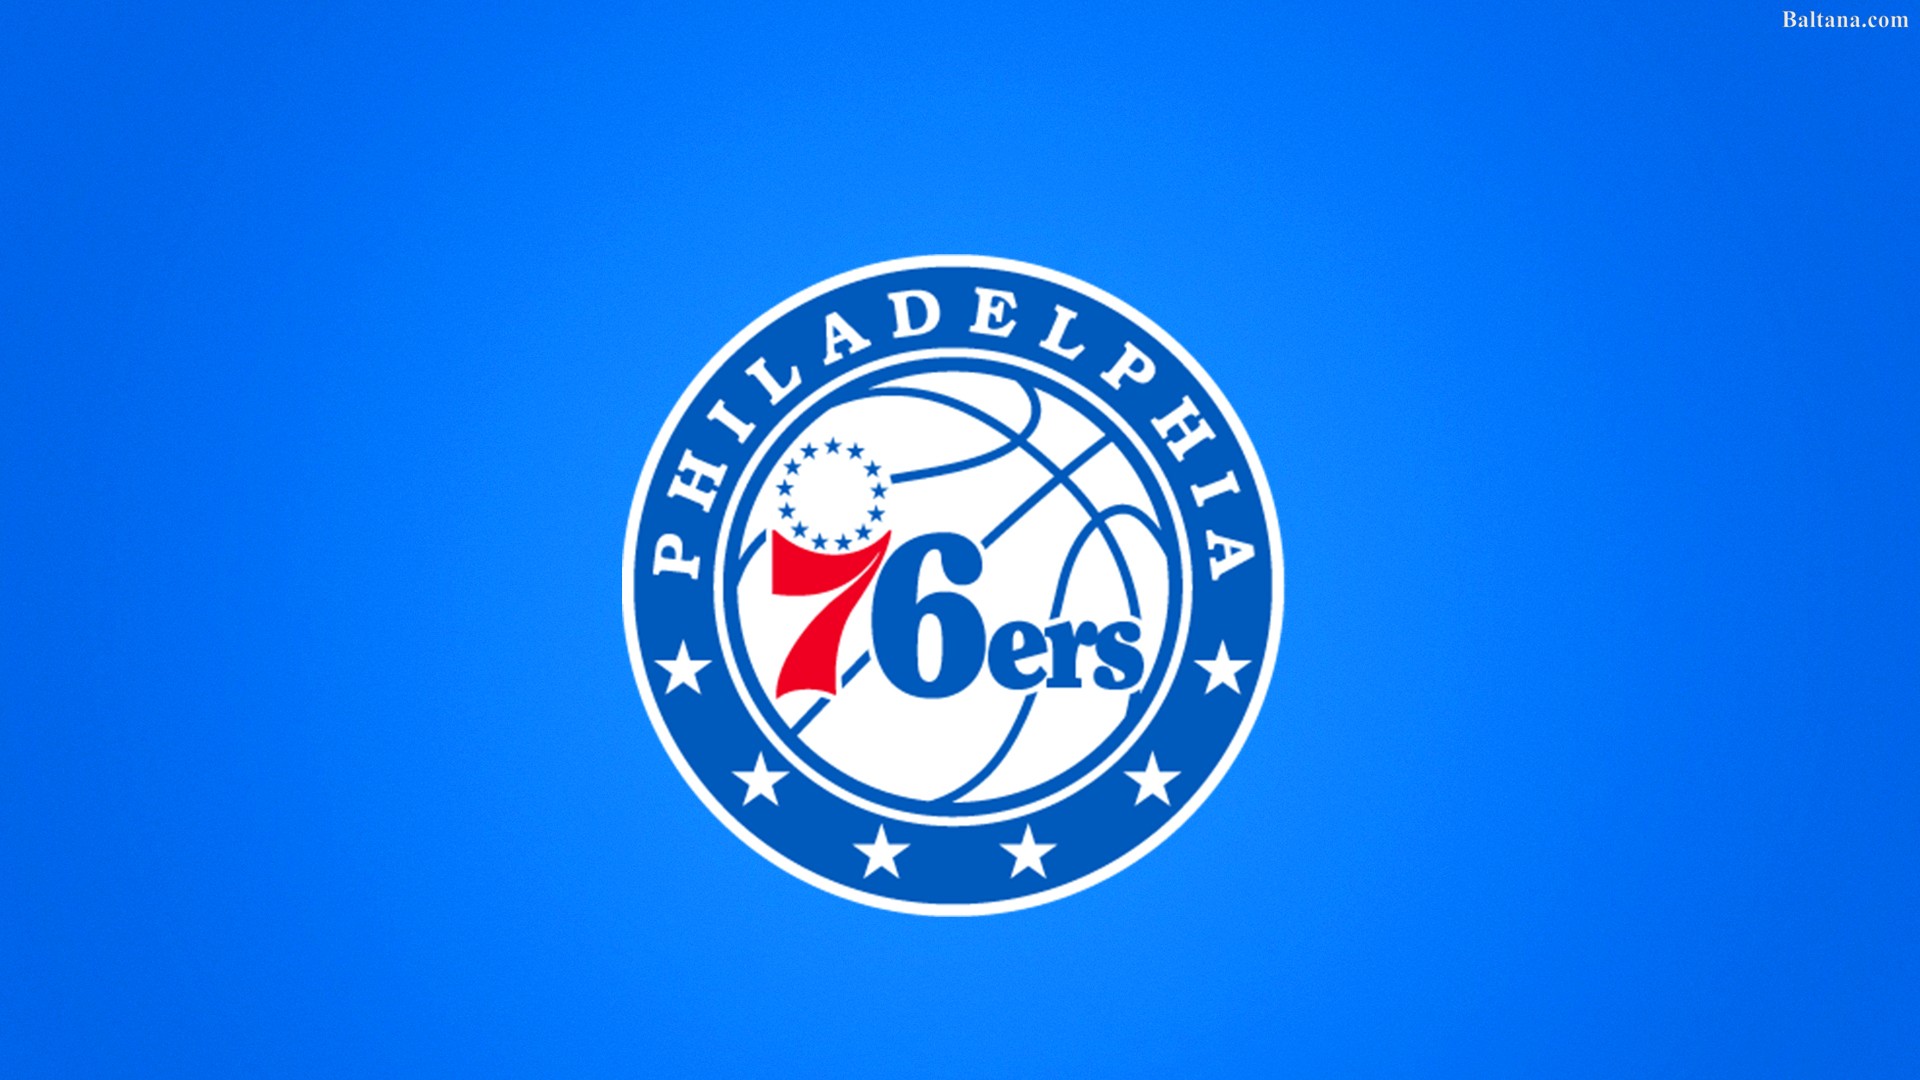 Philadelphia 76ers Wallpaper HD Background Image Pics Photos